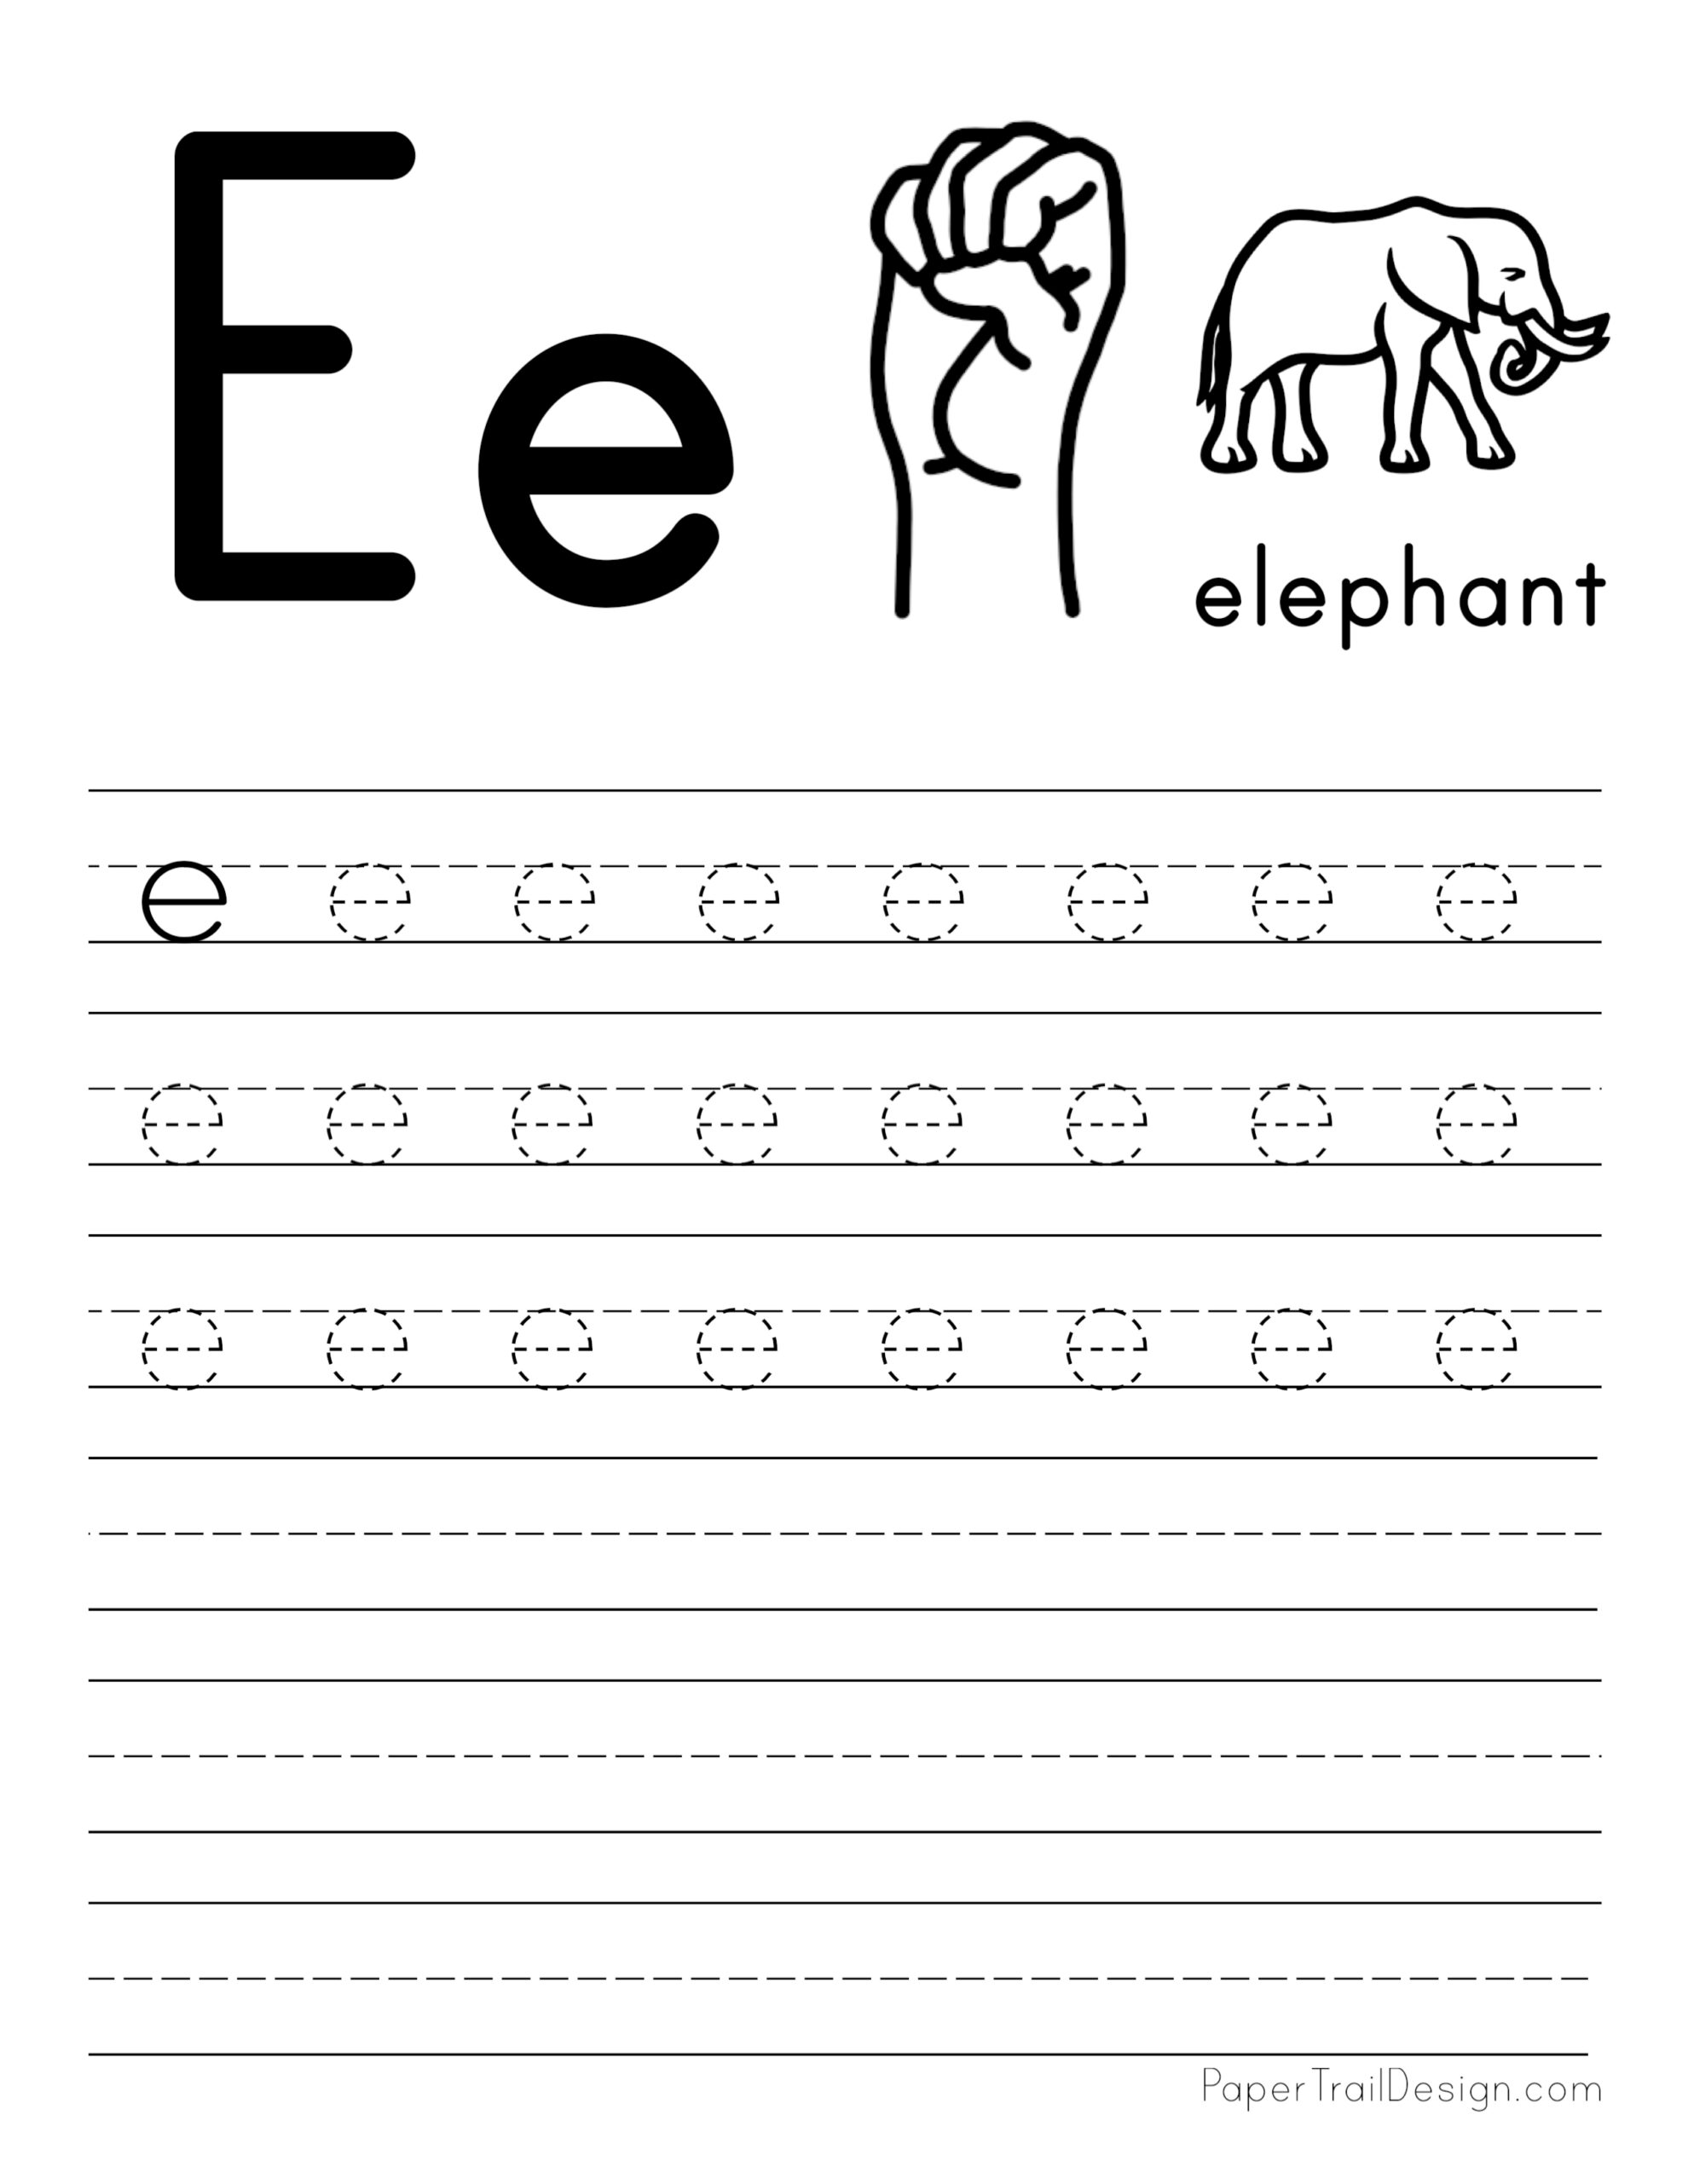 15+ Letter E Worksheets: Free & Easy Print! - The Simple Homeschooler